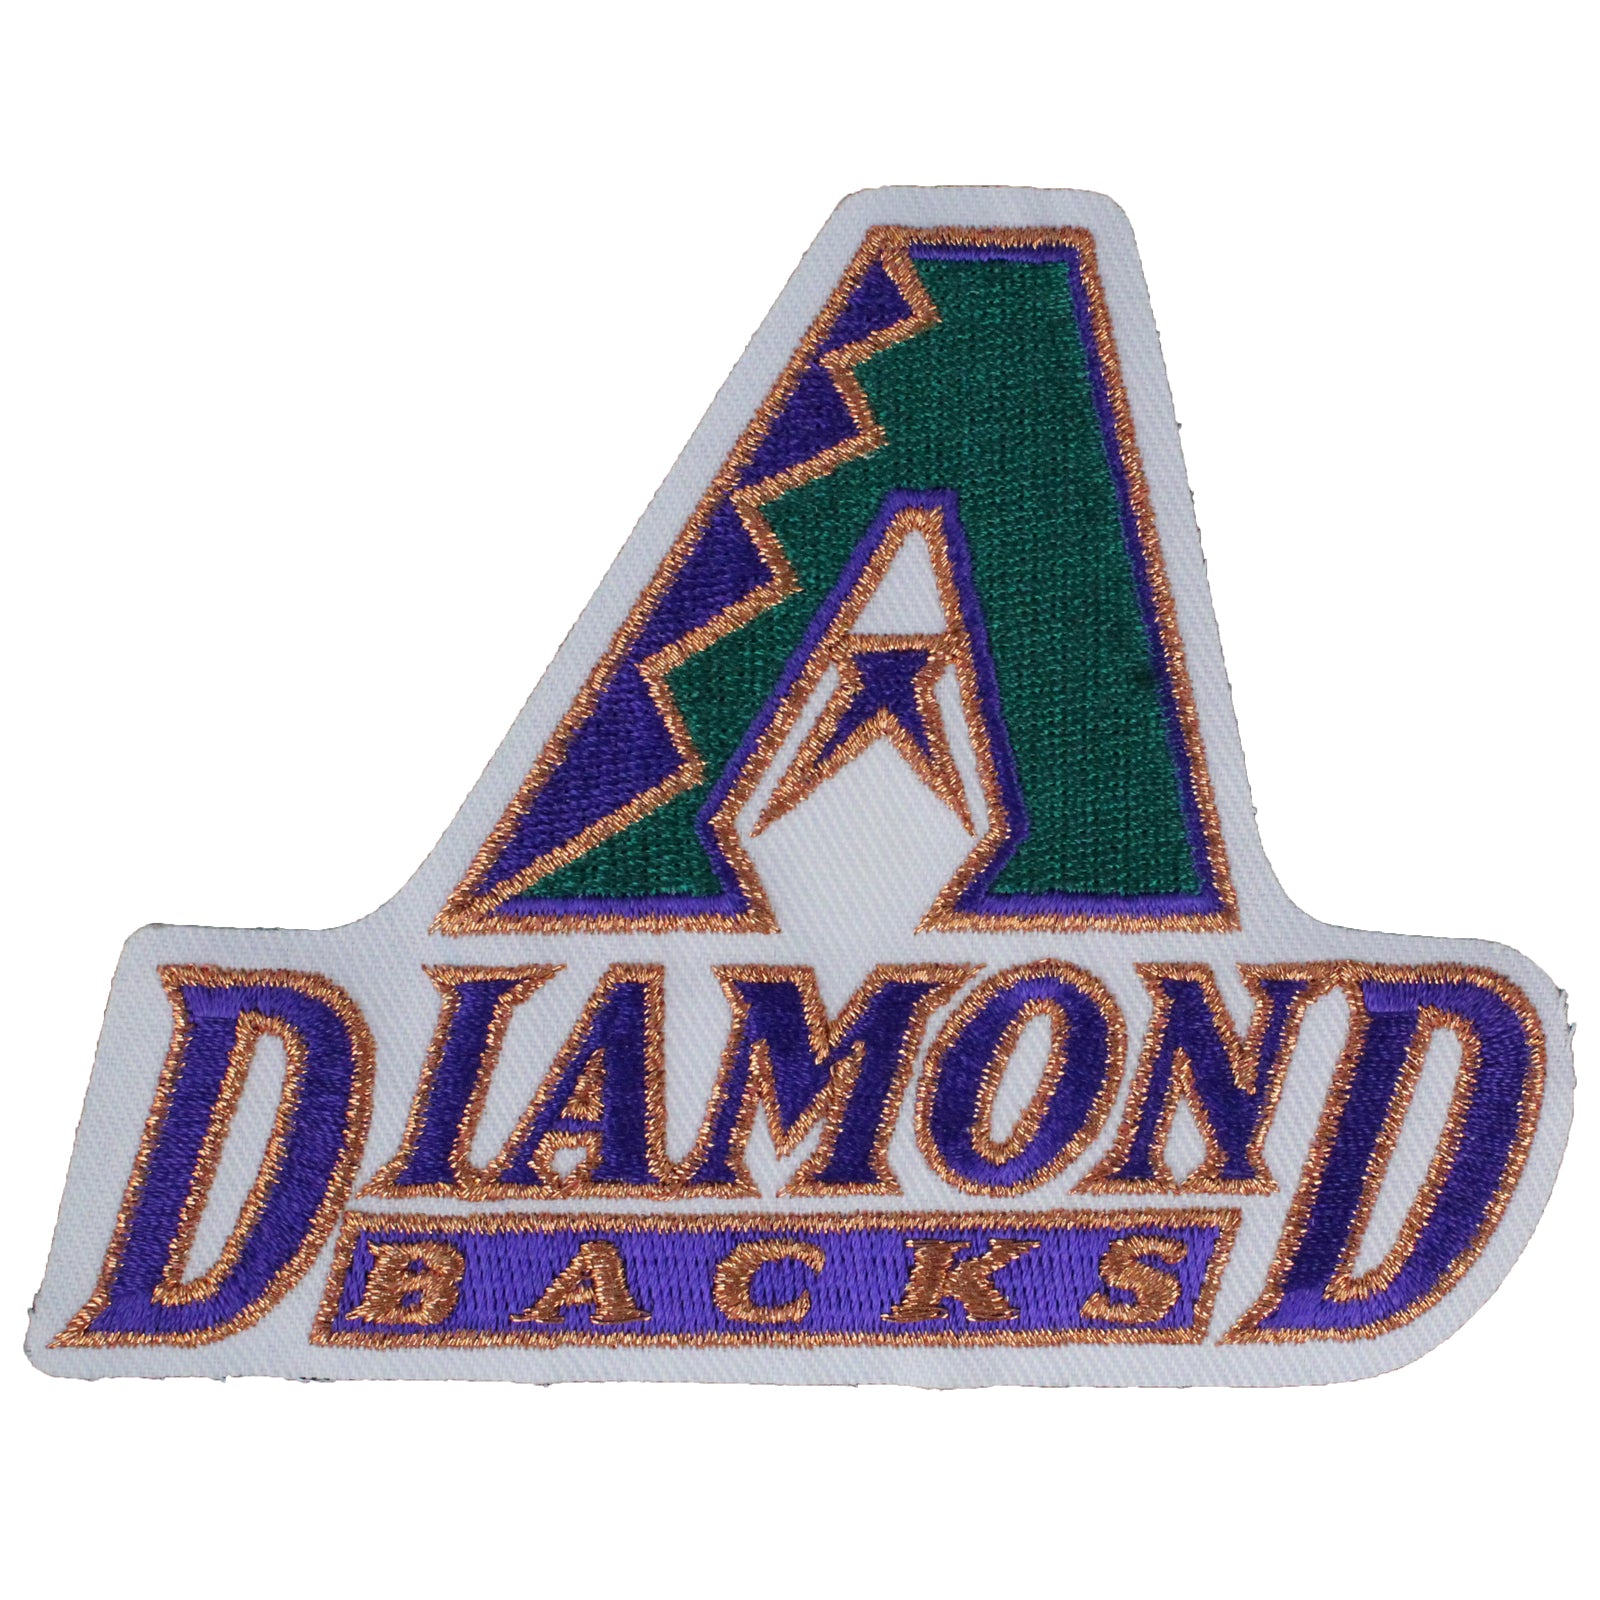 Arizona Diamondbacks Anniversary and Commemorative Patch